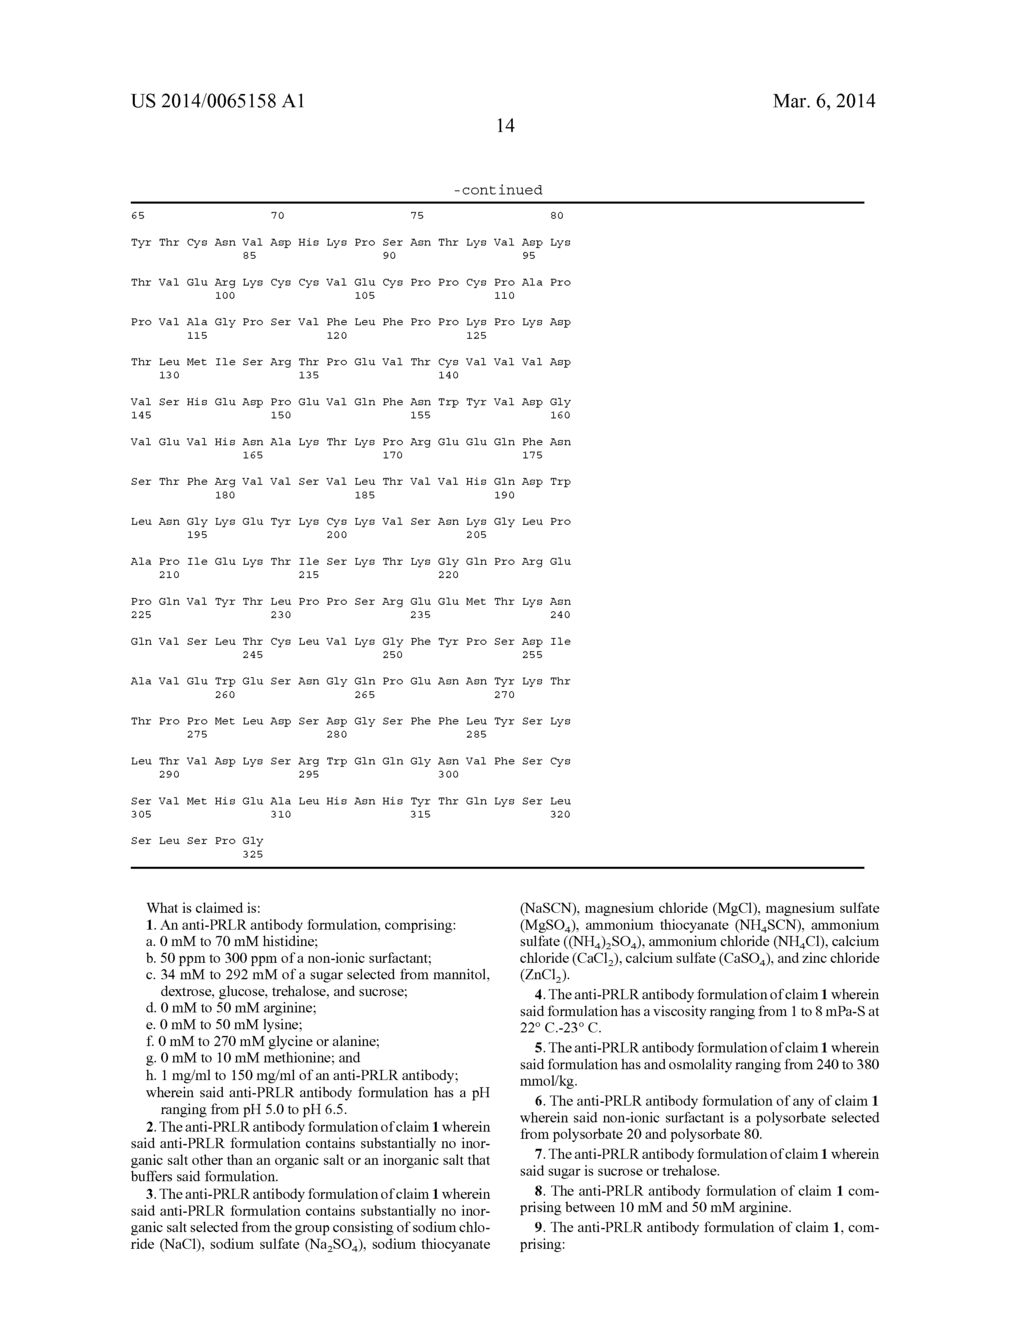 ANTI-PROLACTIN RECEPTOR ANTIBODY FORMULATIONS - diagram, schematic, and image 15